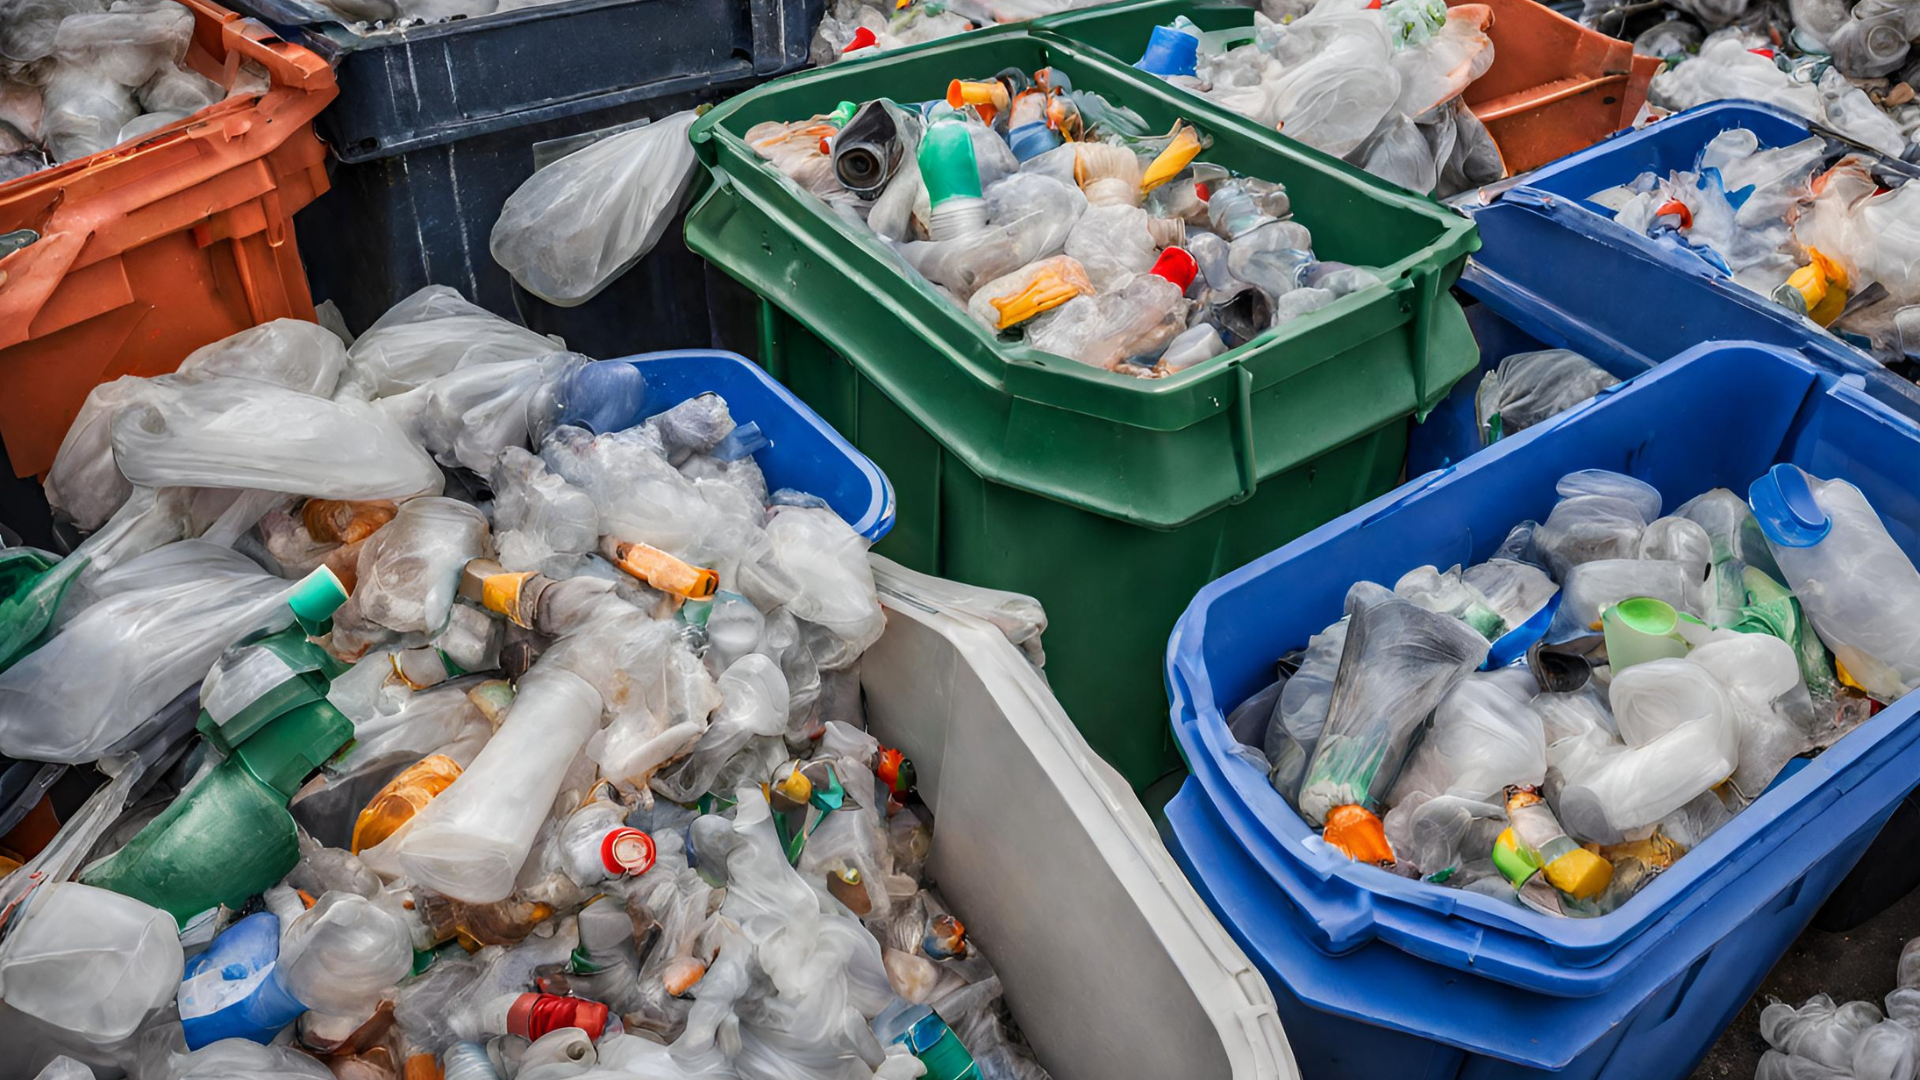 Plastic recycling bins